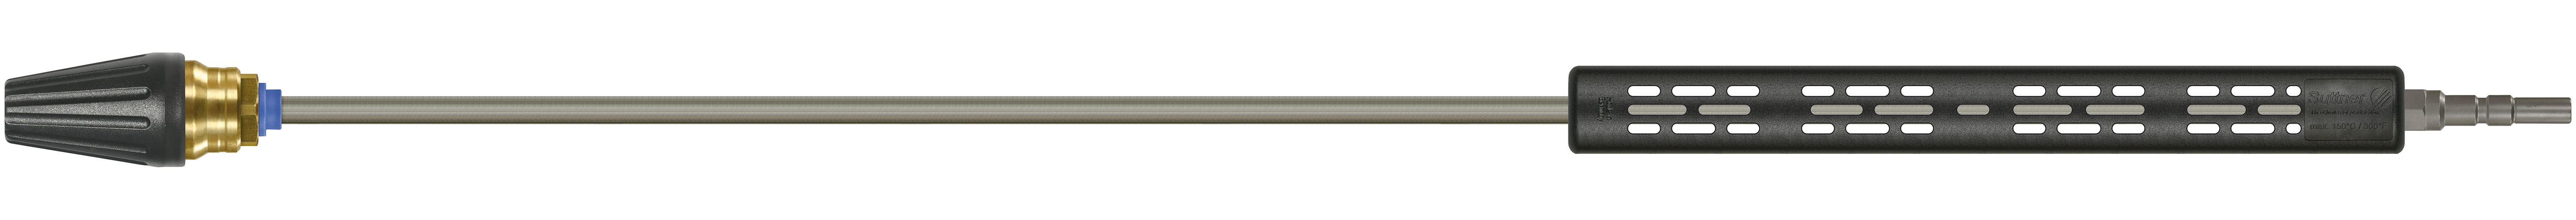 Rotabuse céramique avec lance 1000mm, 200-400 bar, Calibre 060